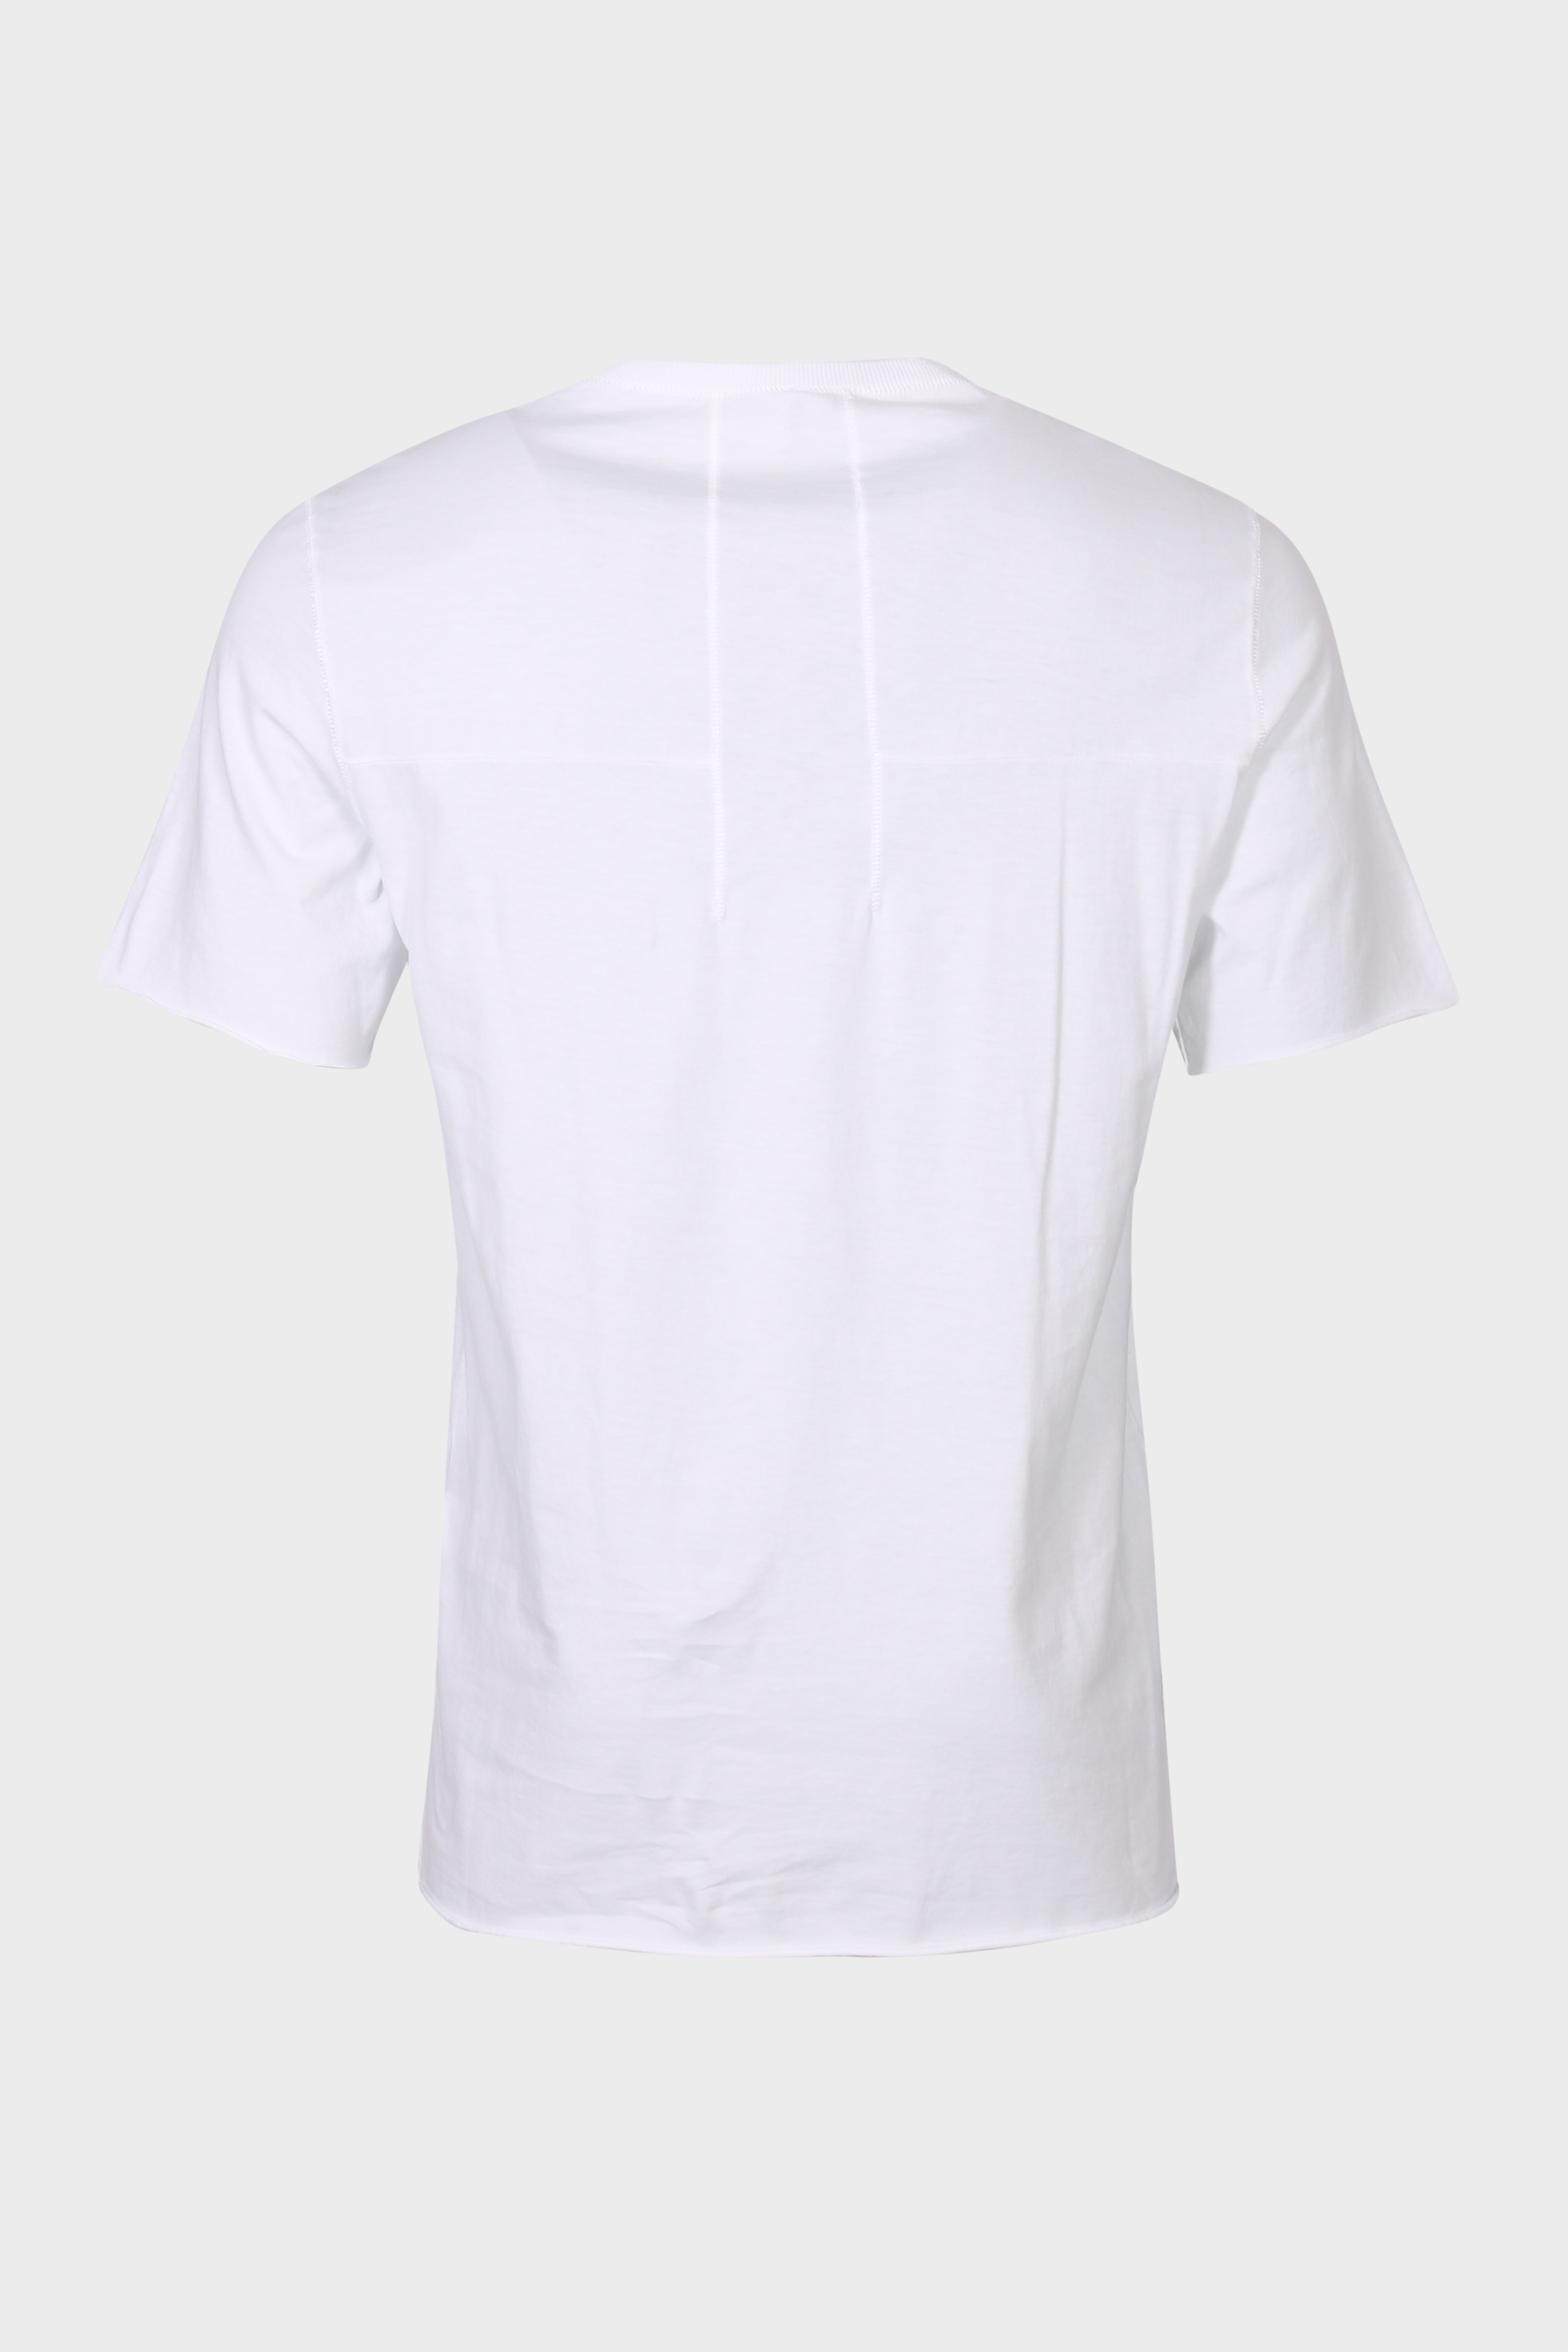 TRANSIT UOMO Cotton Stretch T-Shirt in White S